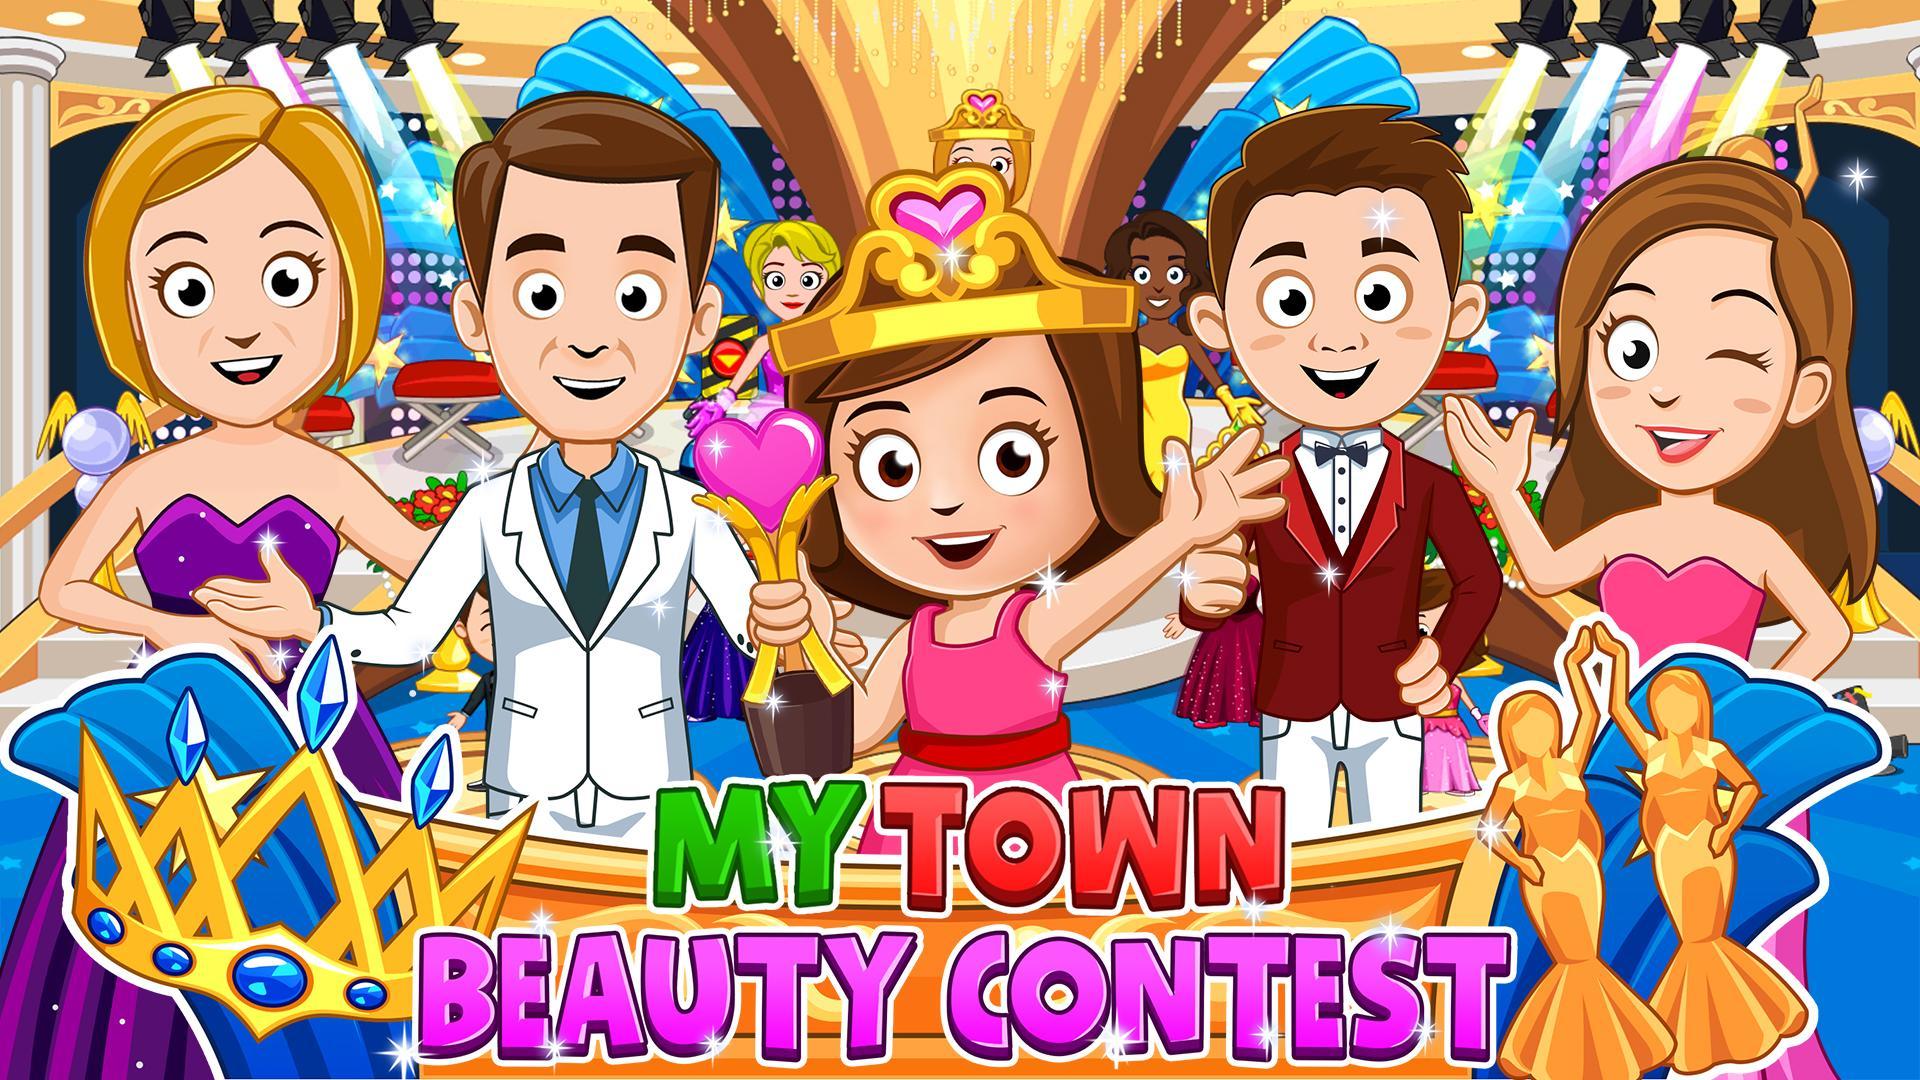 Screenshot 1 of My Town : Kontes kecantikan 7.00.15